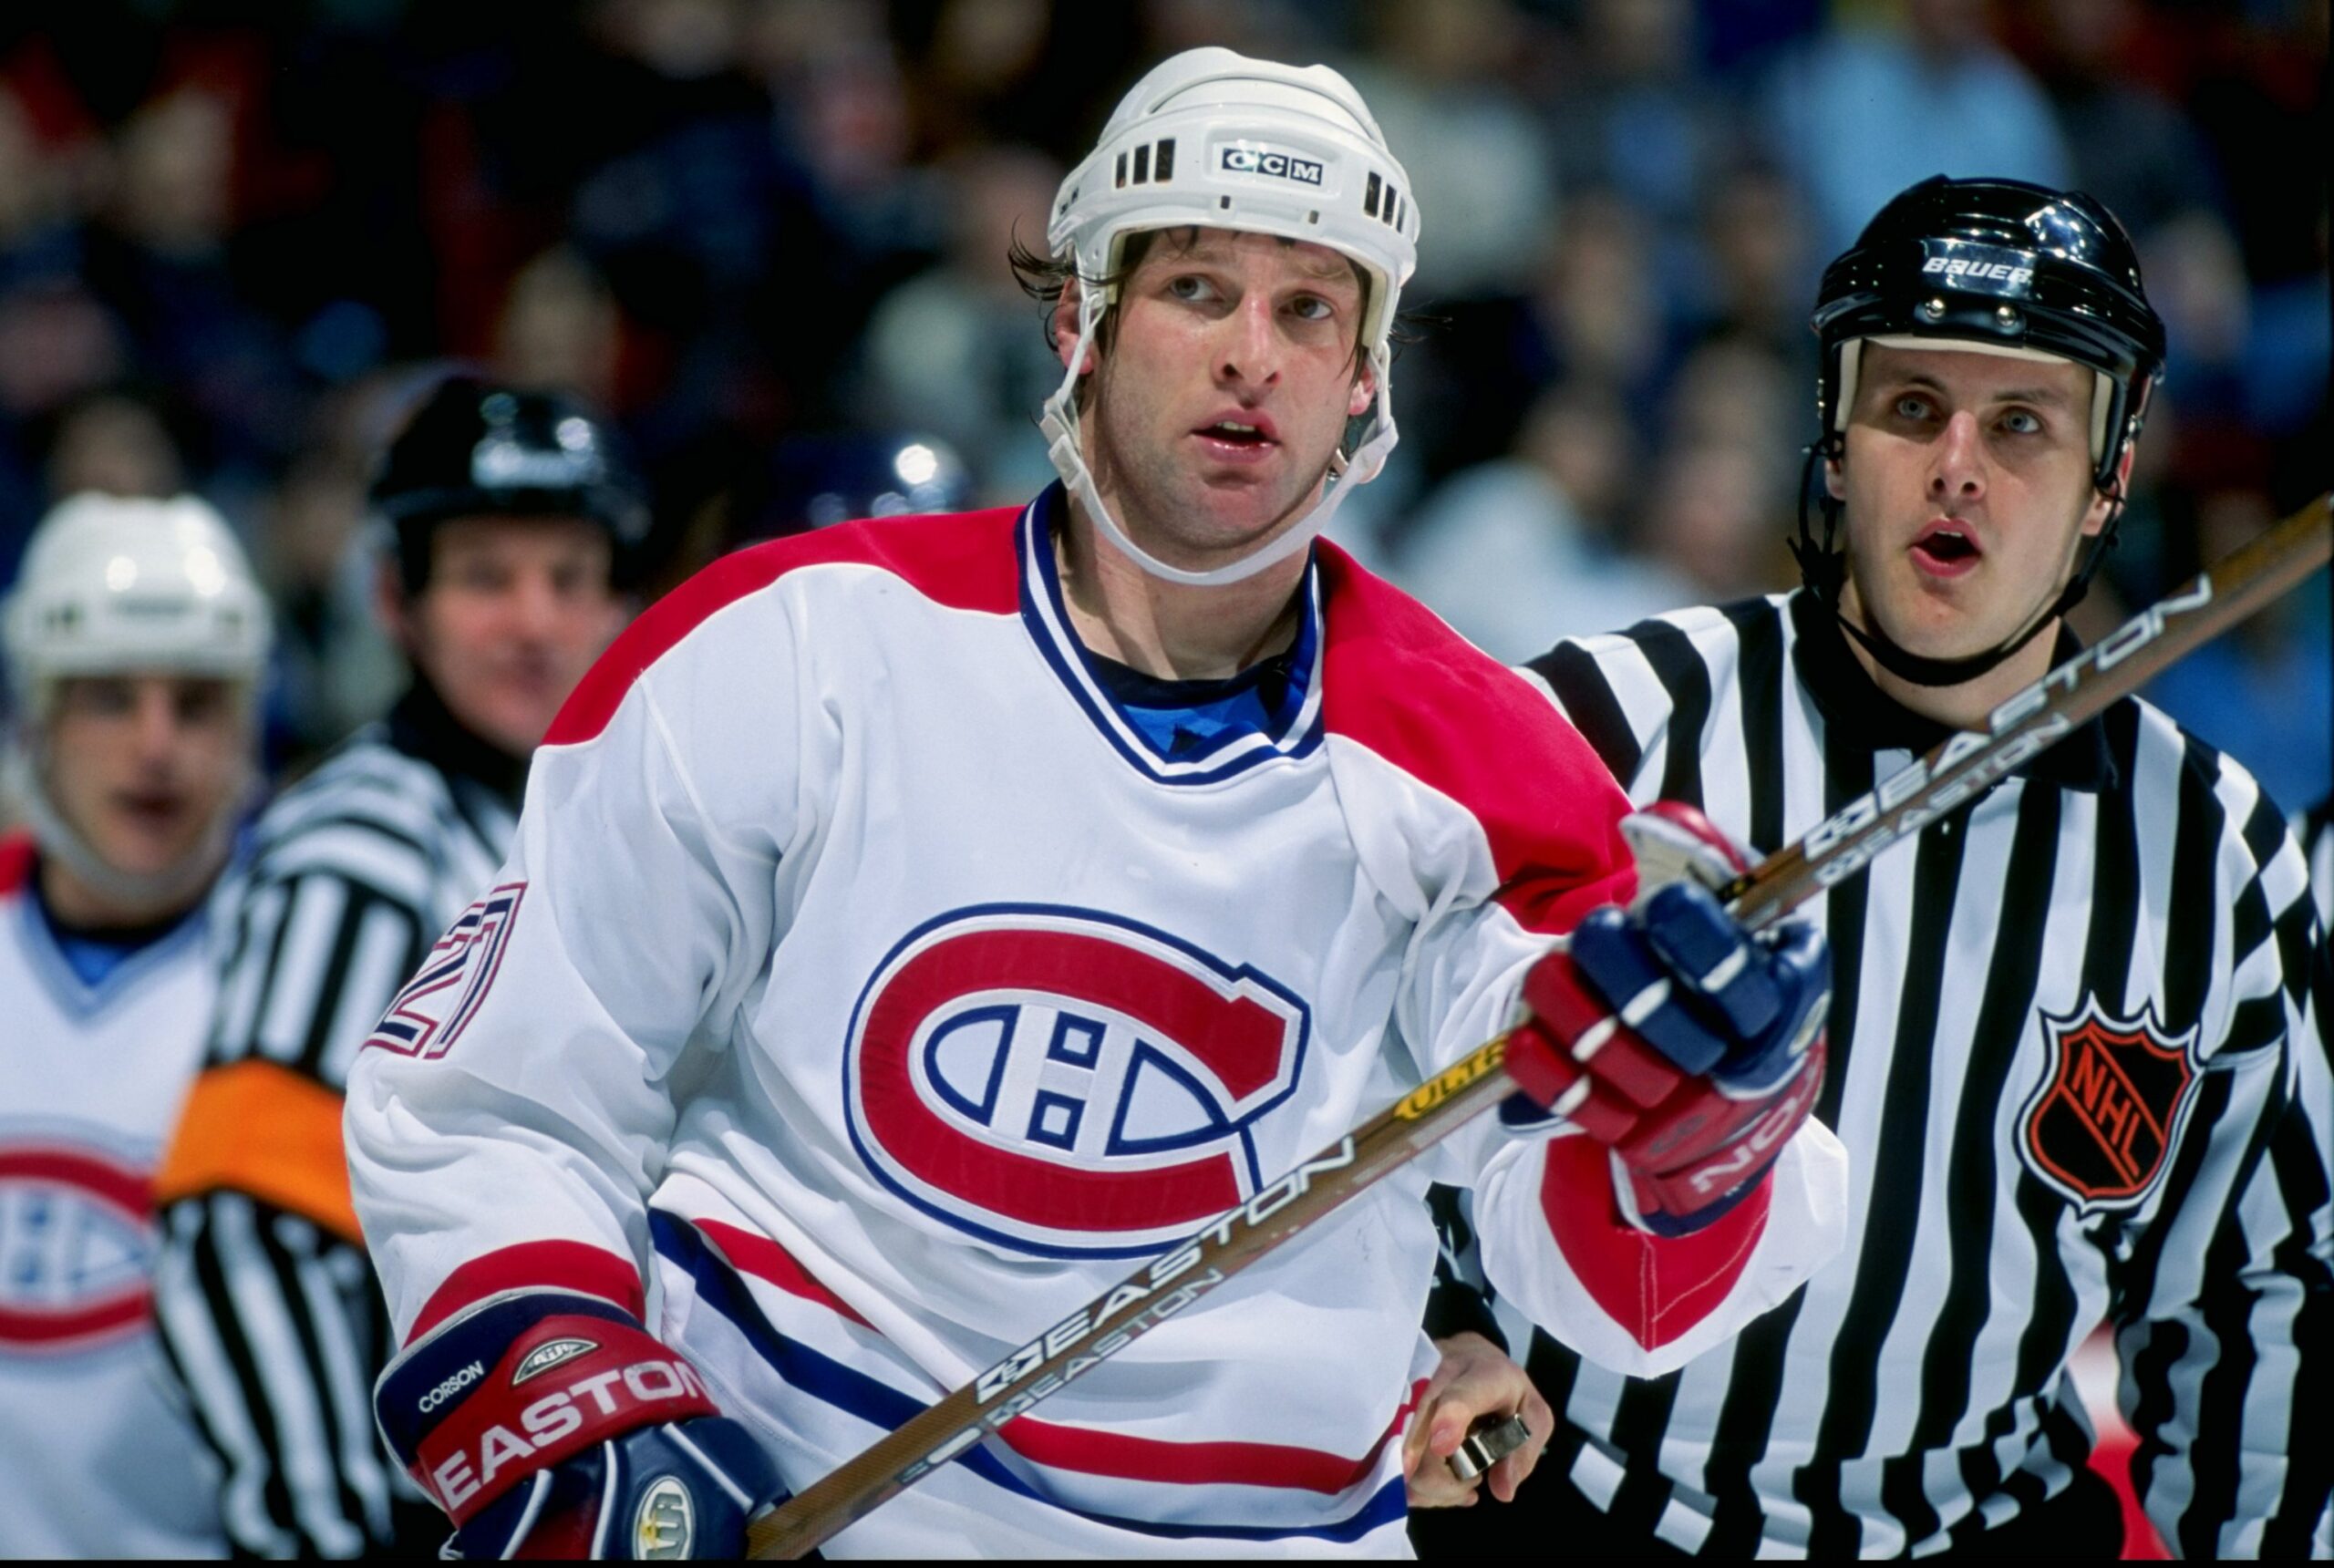 Shayne Corson, Ice Hockey Wiki